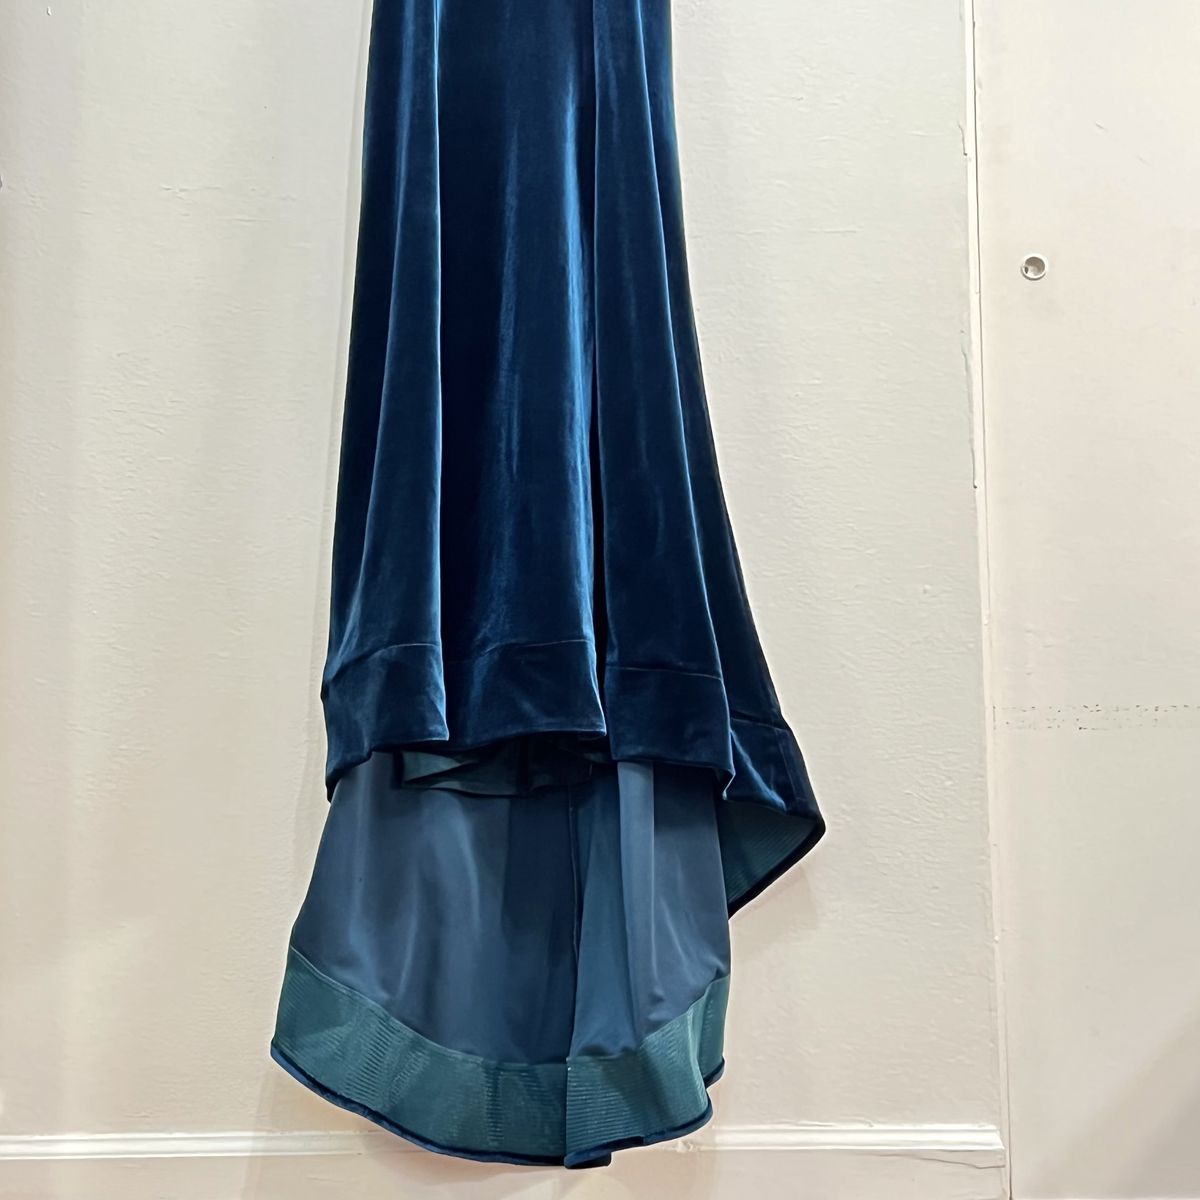 Style 24626 La Femme Size 4 Off The Shoulder Velvet Blue Floor Length Maxi on Queenly